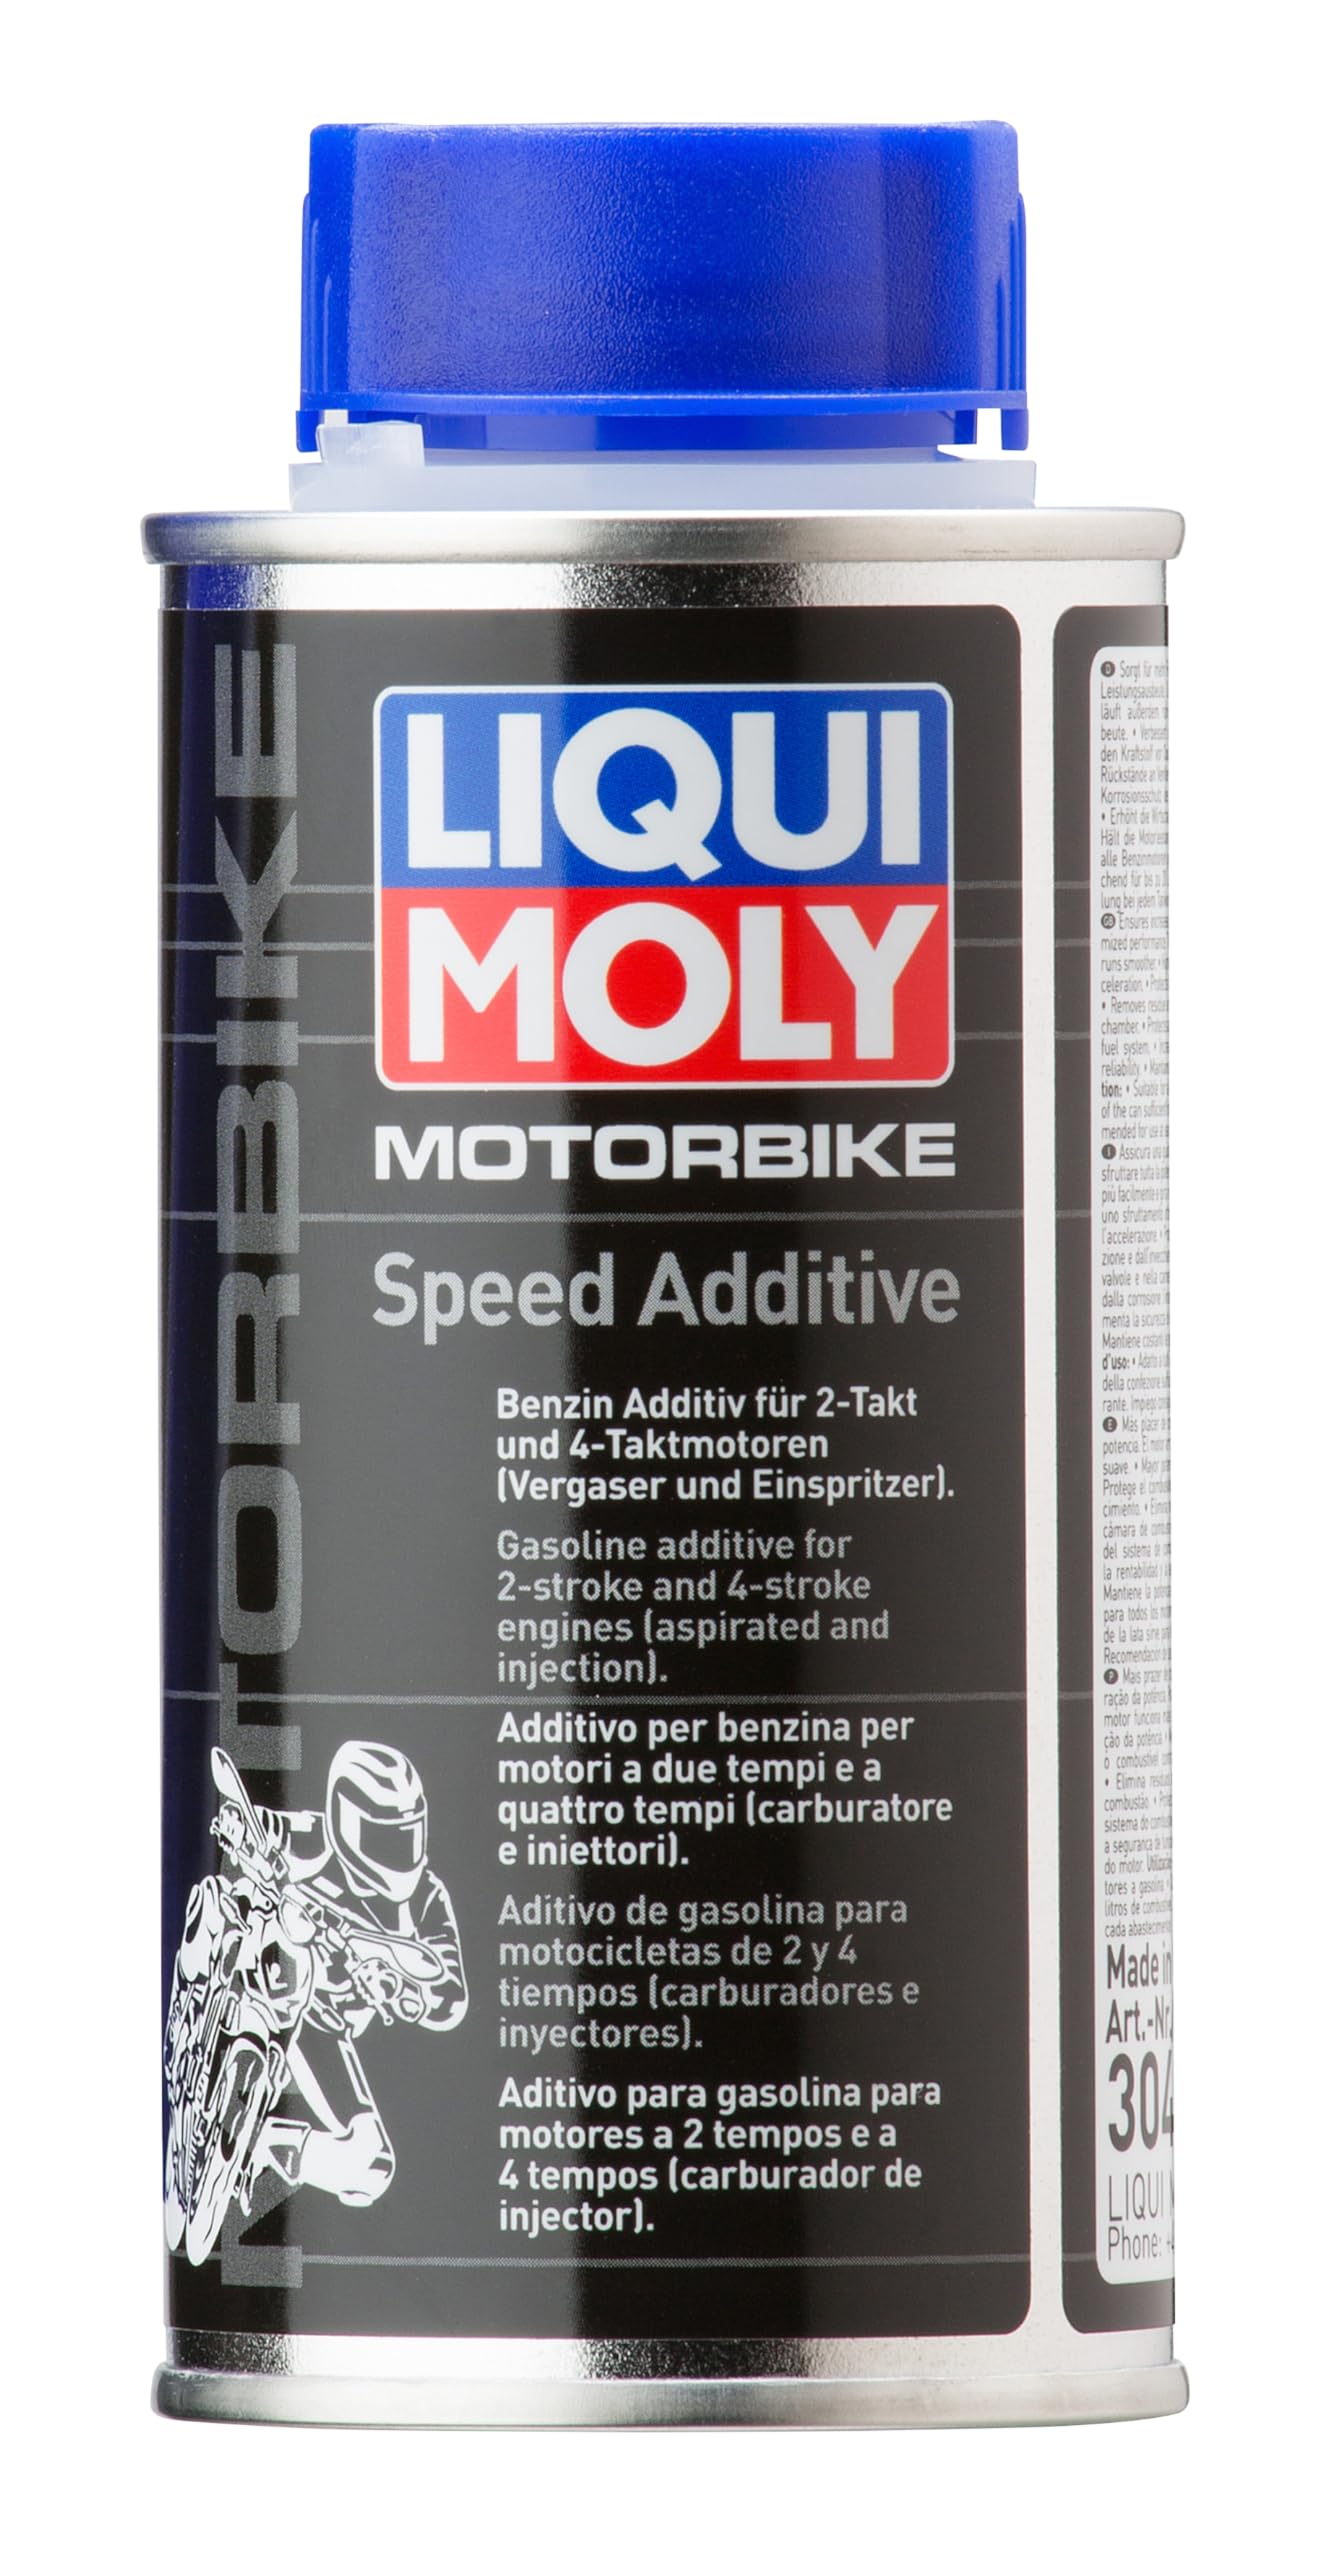 LIQUI MOLY Motorbike Speed Additive | 150 ml | Motorrad Benzinadditiv | Art.-Nr.: 3040 von Liqui Moly